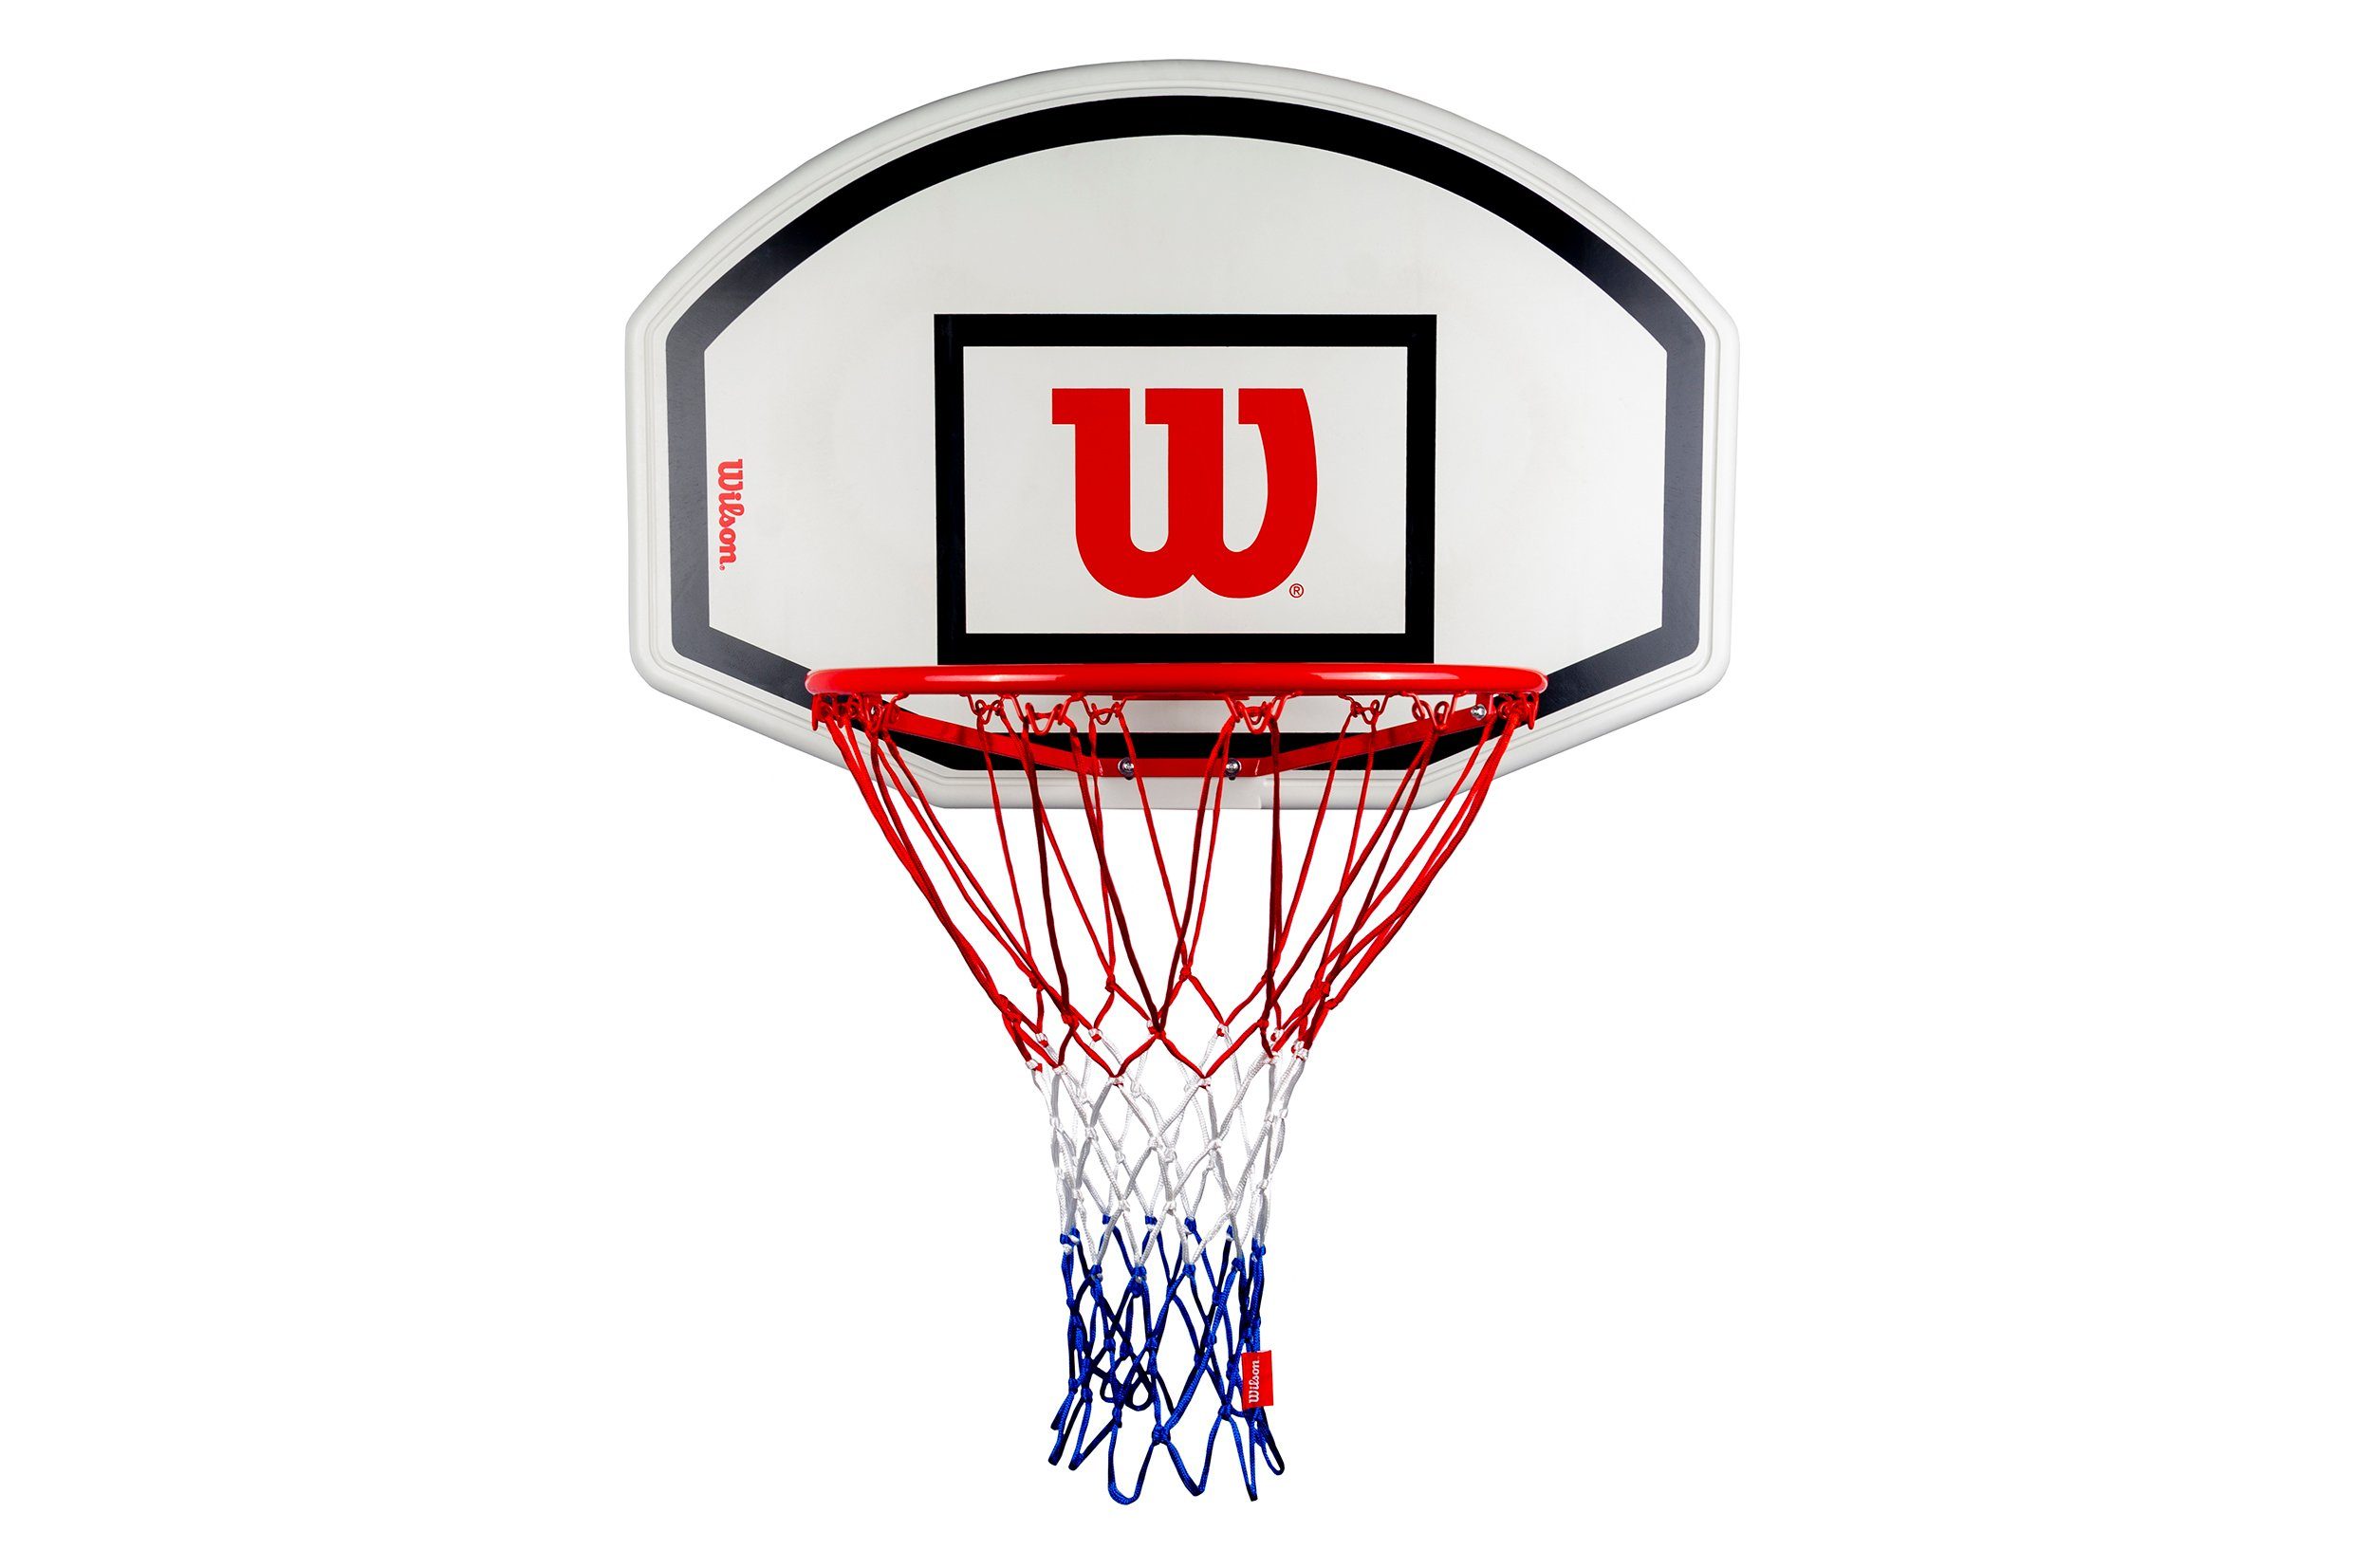 Basketballring metallener Basketballkorb, Wilson Wilson abklappbar Basketballkorb